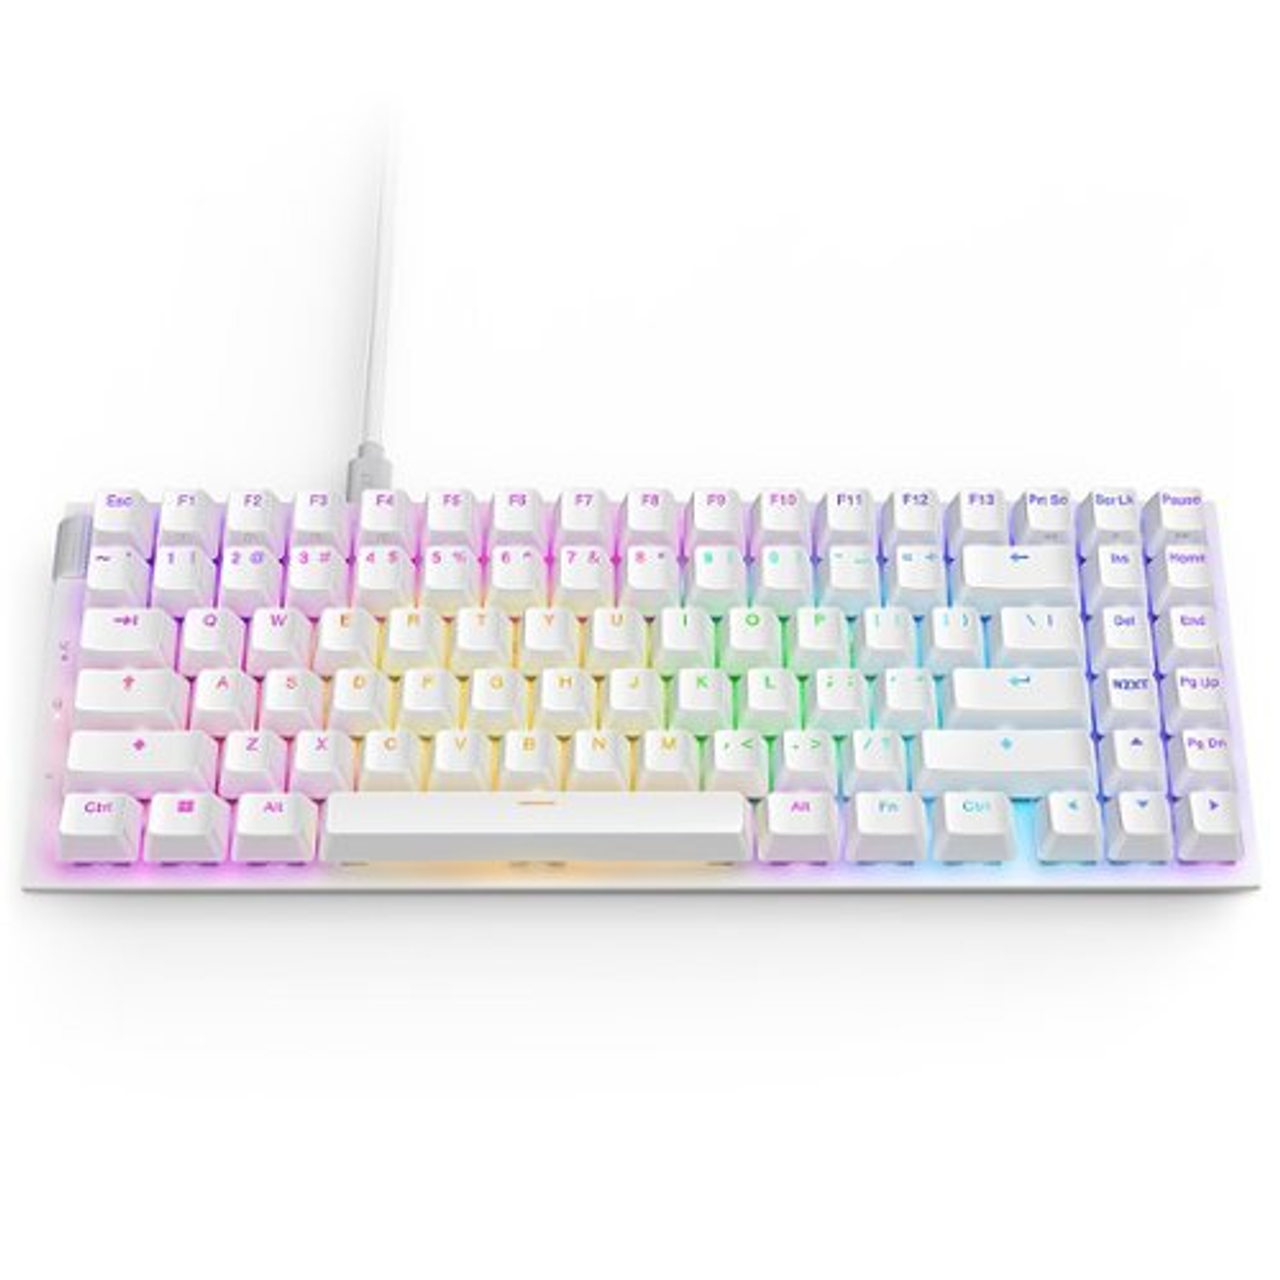 NZXT - Function 2 - Optical Gaming Keyboard - White